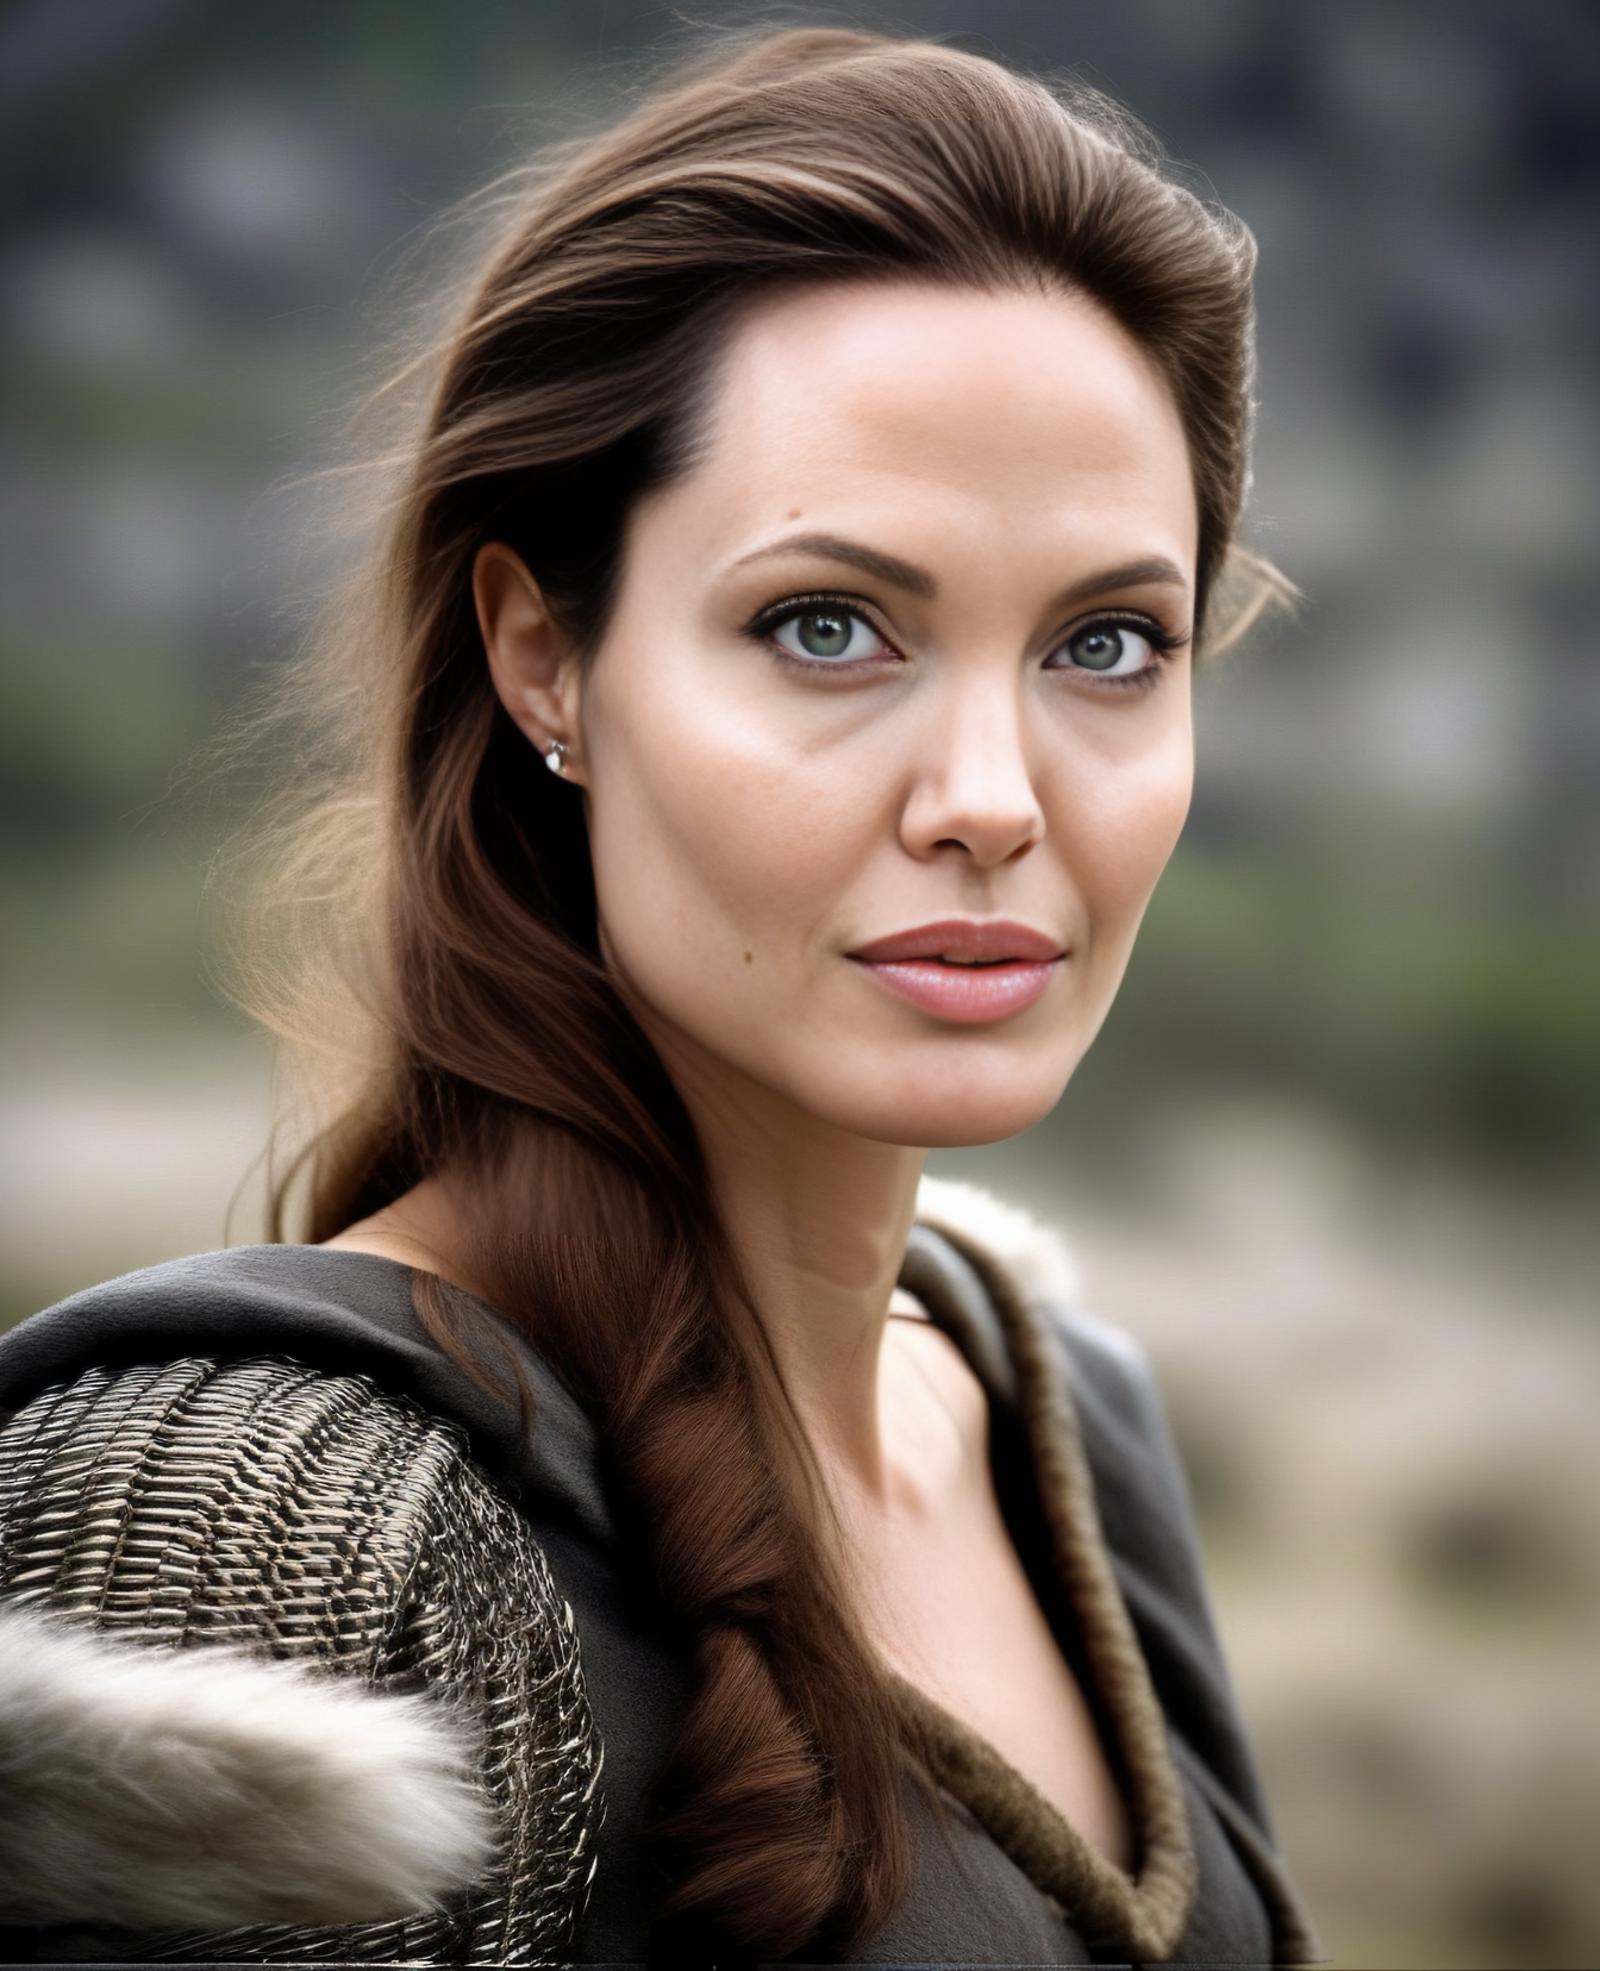 Angelina Jolie image by parar20